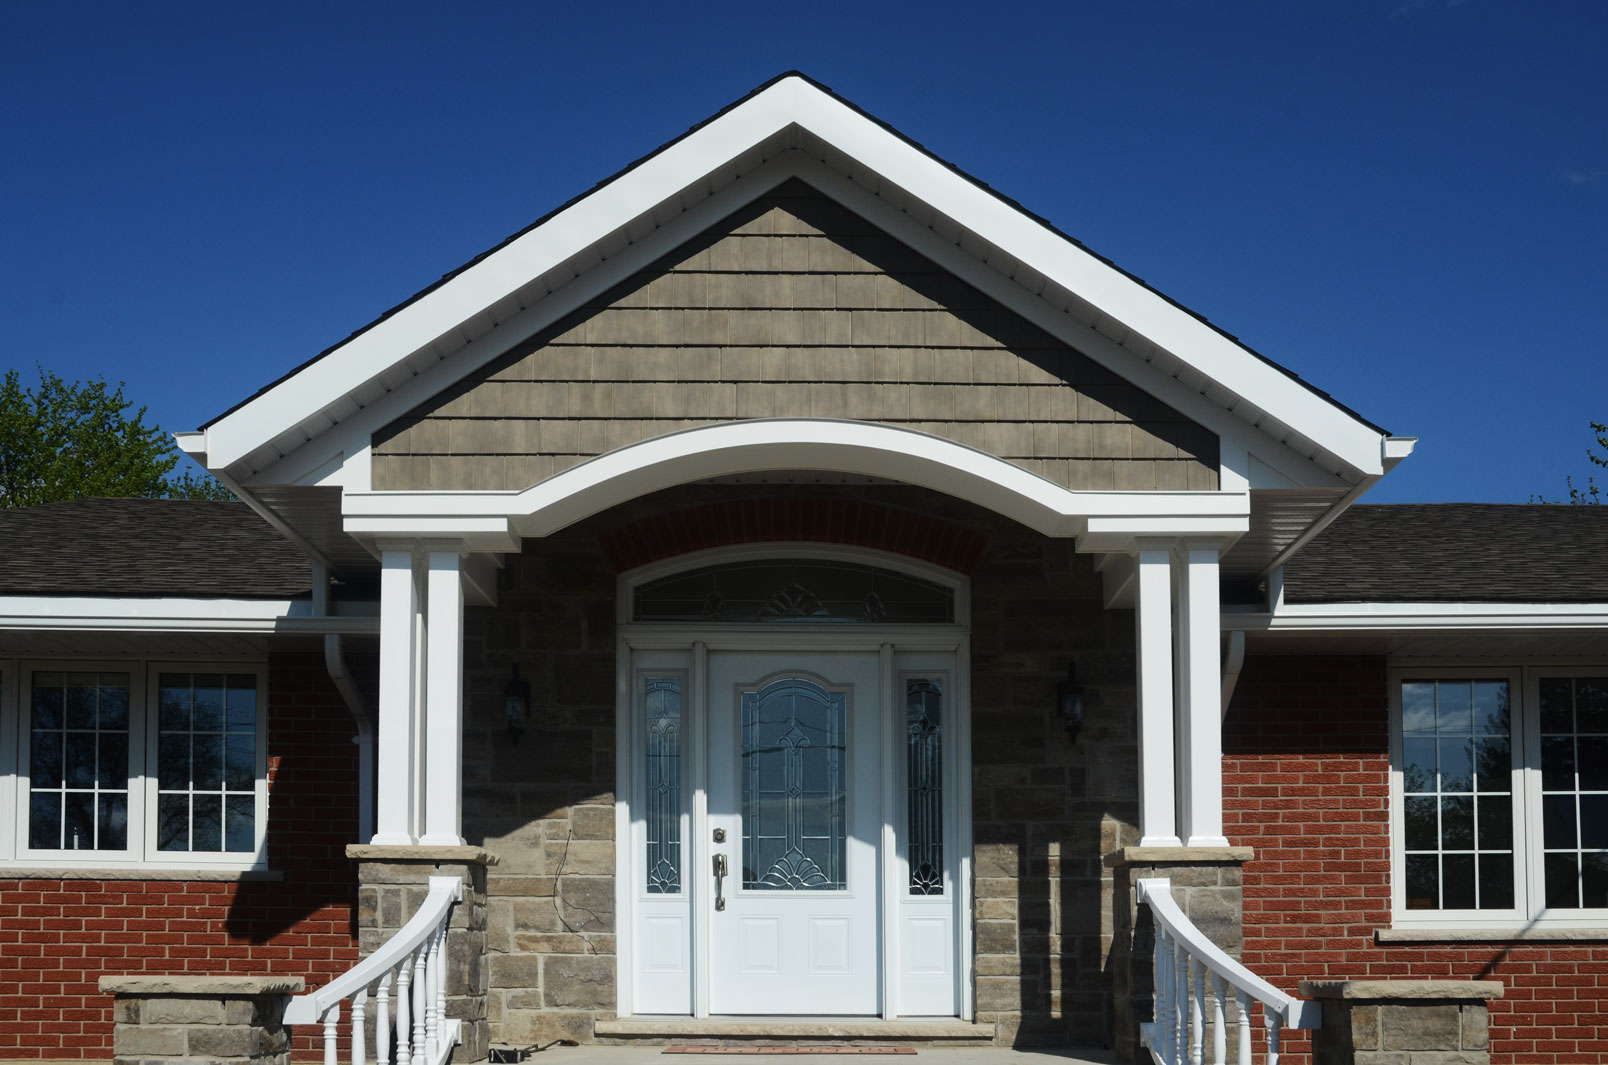 Keywords: brick house, white door

Modified Description: A brick house with a white door and steps.